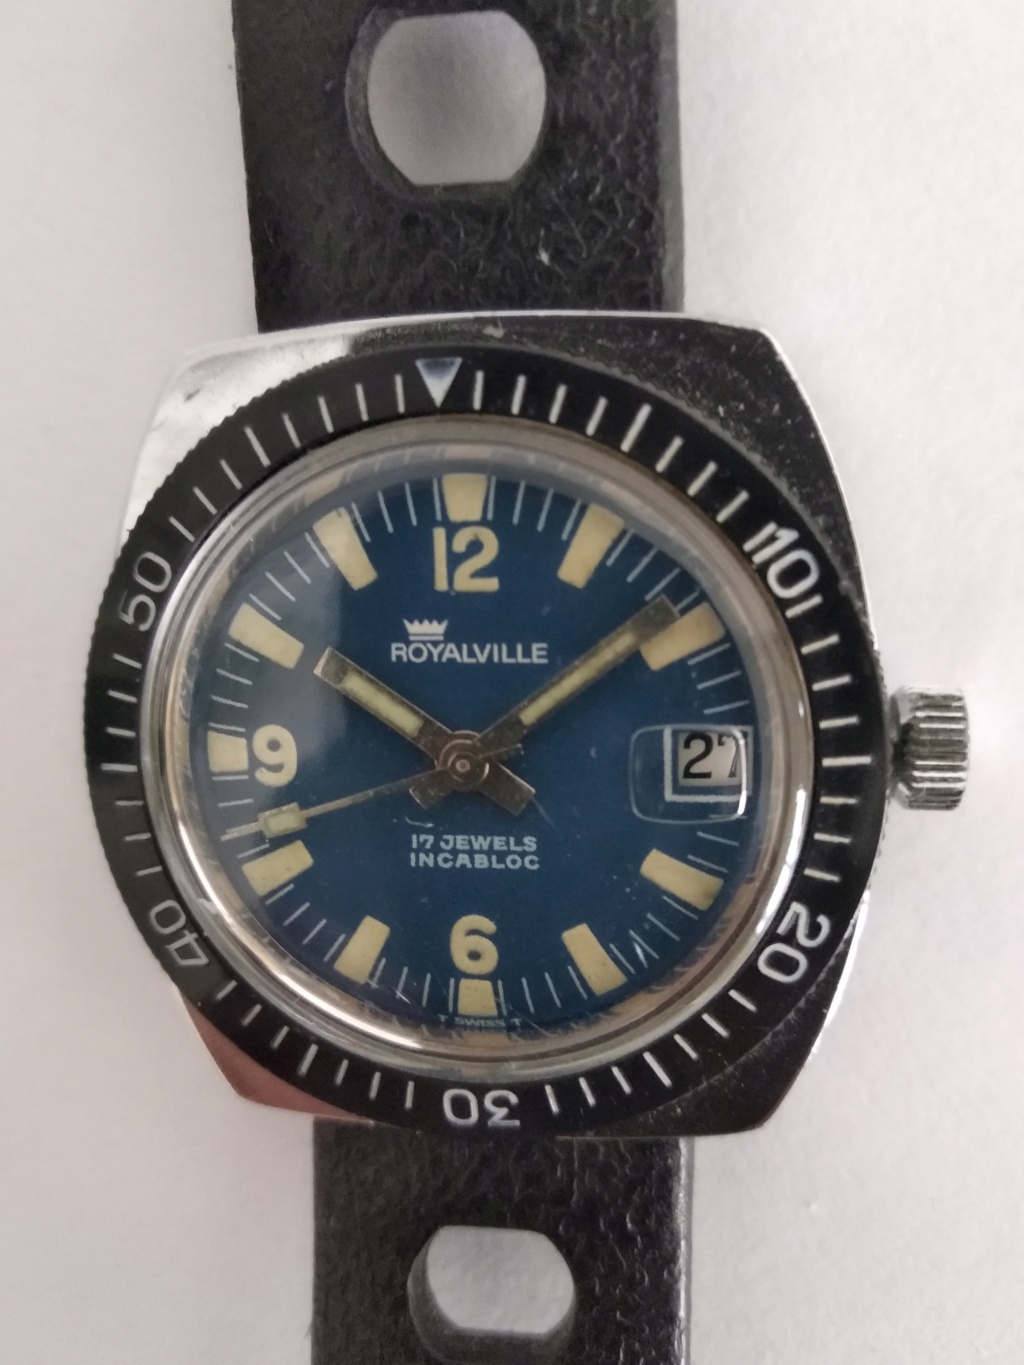 Relógios de mergulho vintage - Página 15 Img_2054